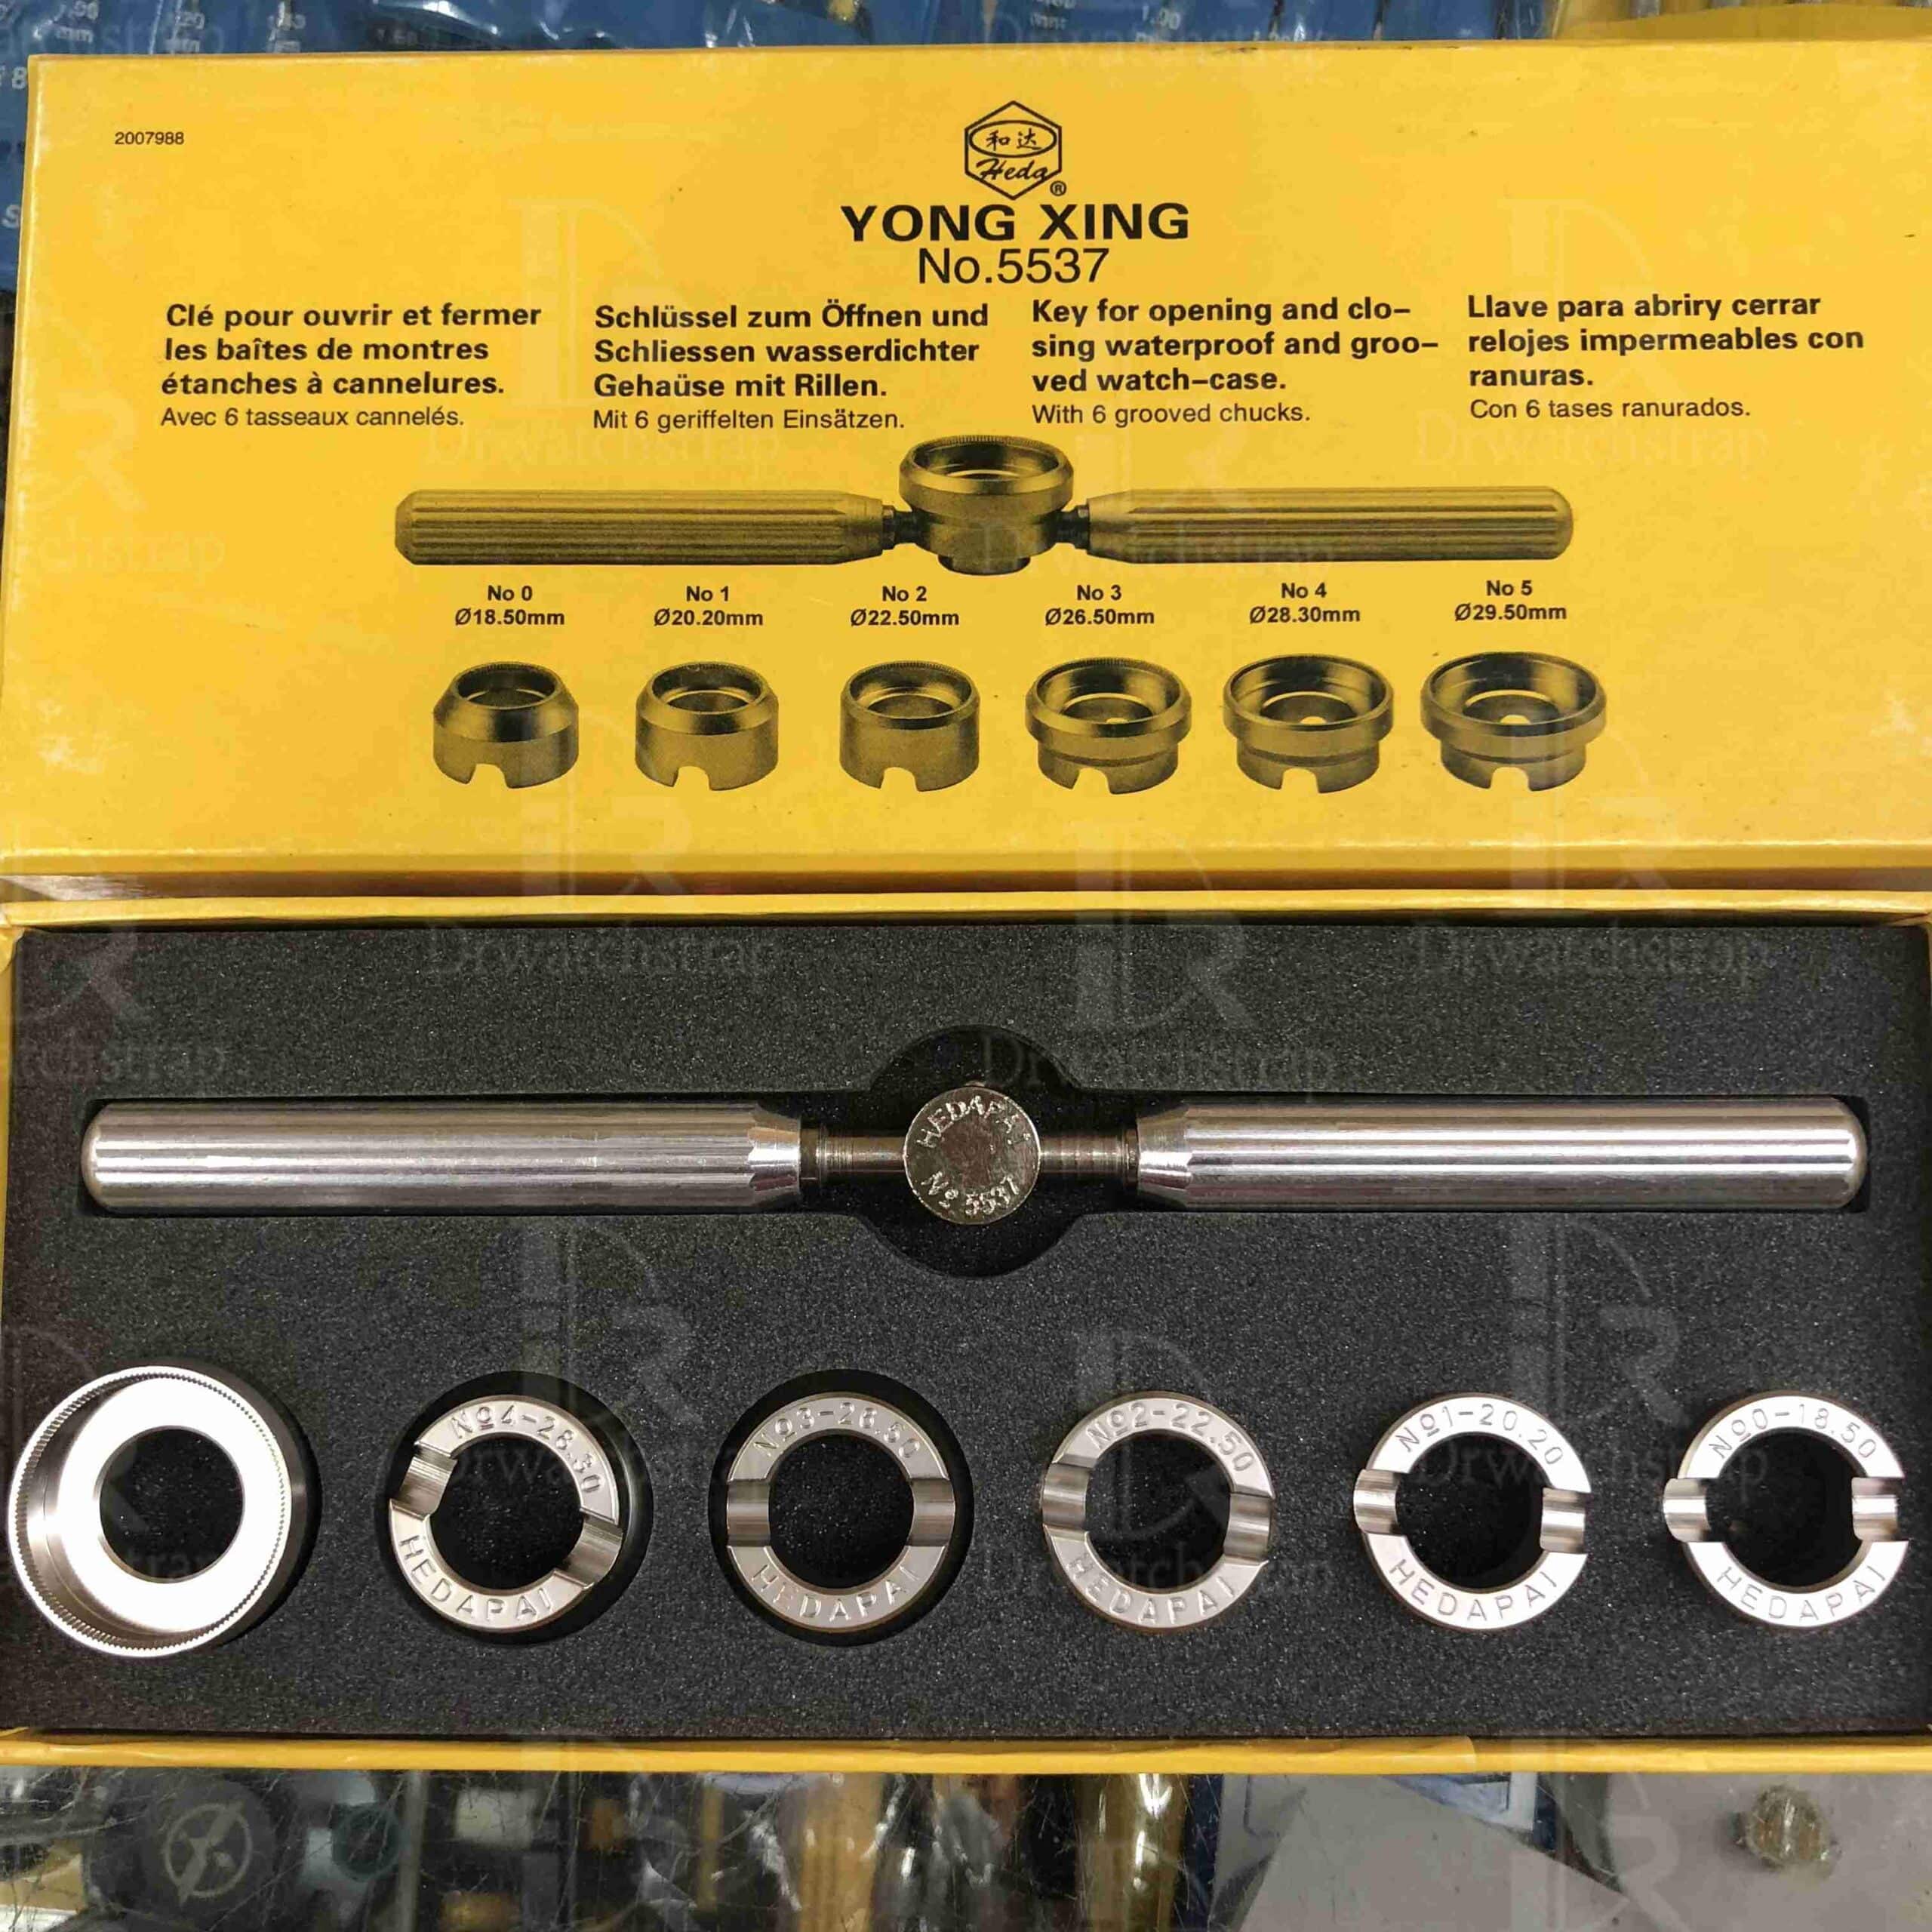 Watch repair tool - Back case opener